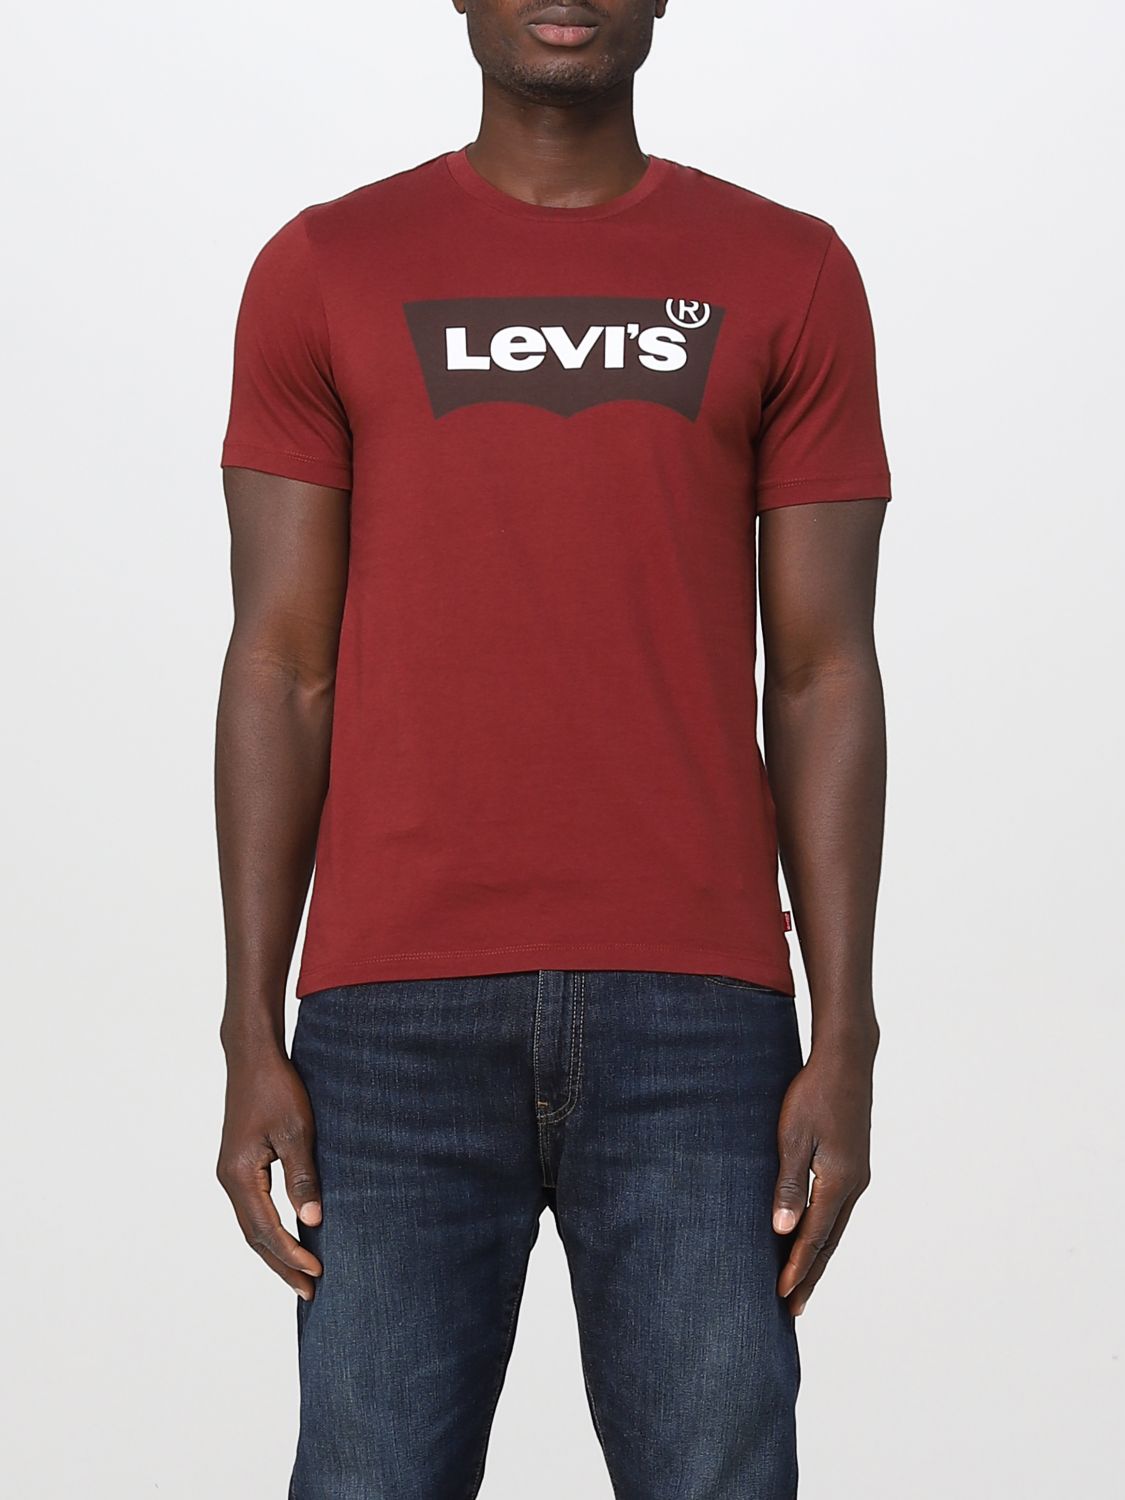 LEVI'S: t-shirt for man - Burgundy | Levi's t-shirt 224910476 online on  